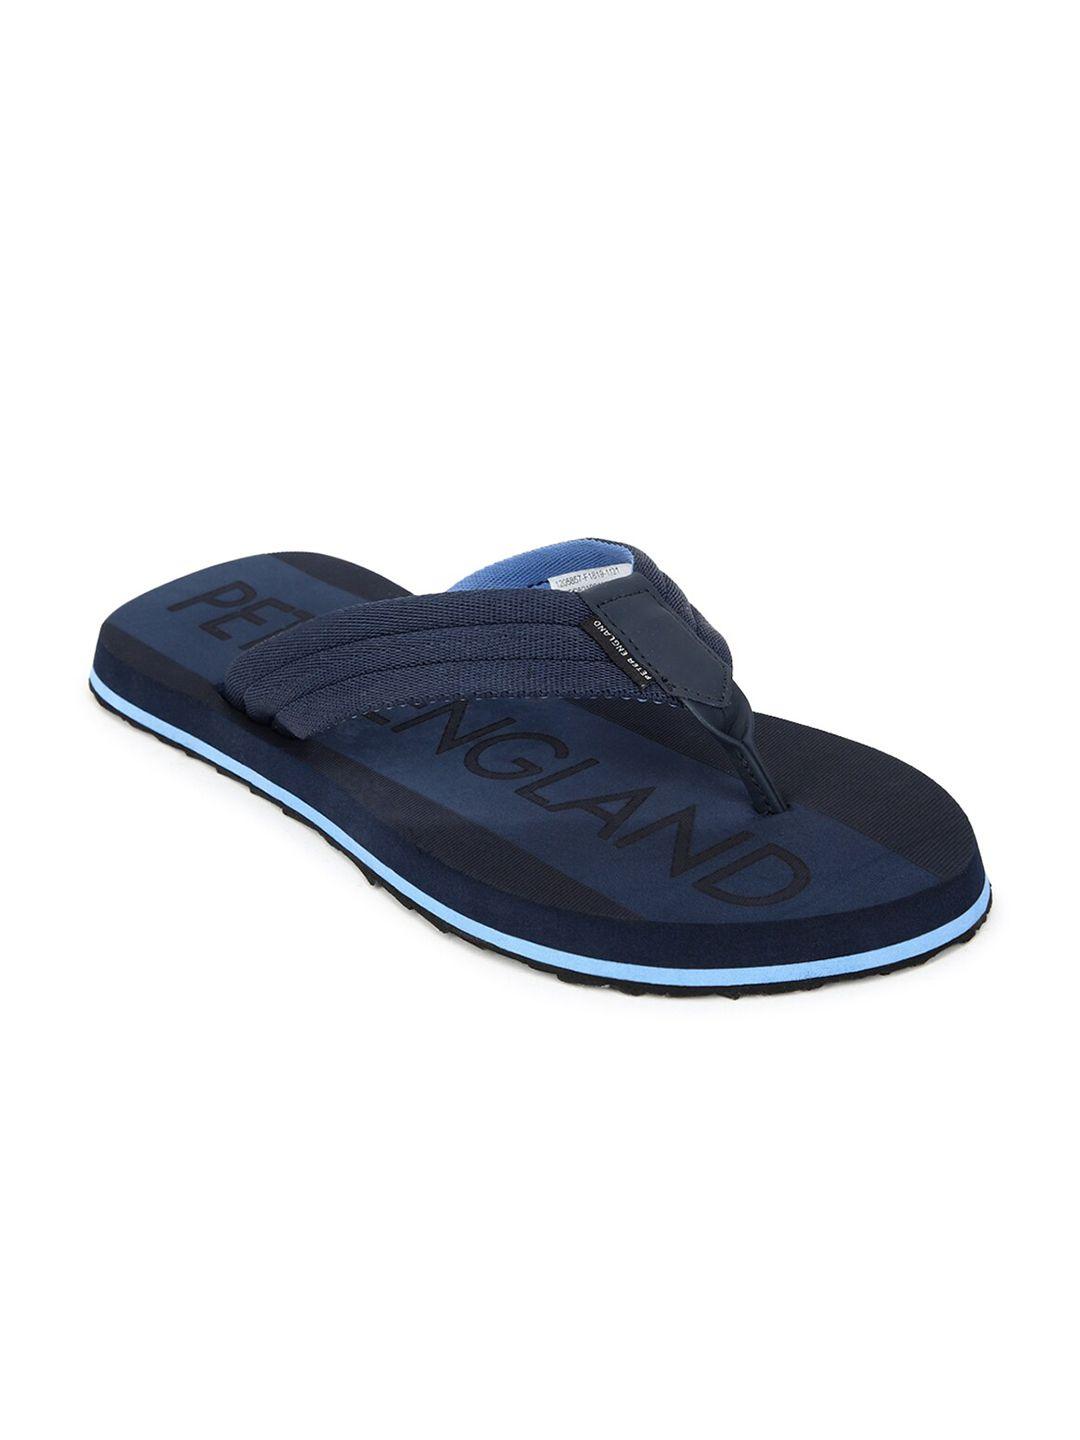 peter-england-men-navy-blue-printed-rubber-thong-flip-flops